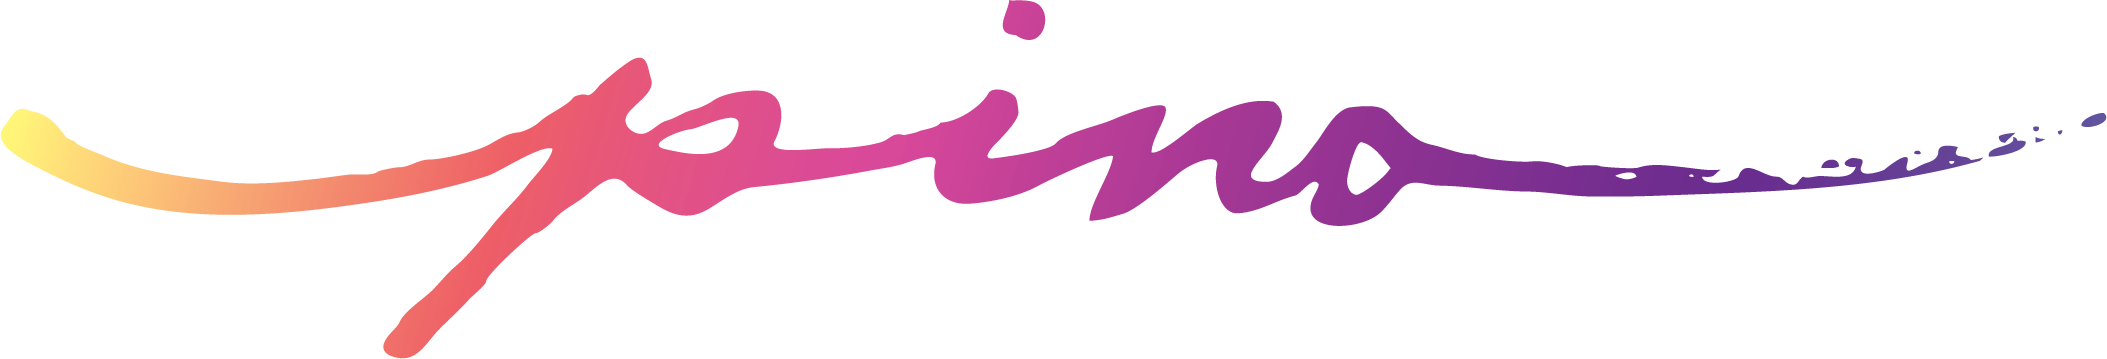 pino script logo